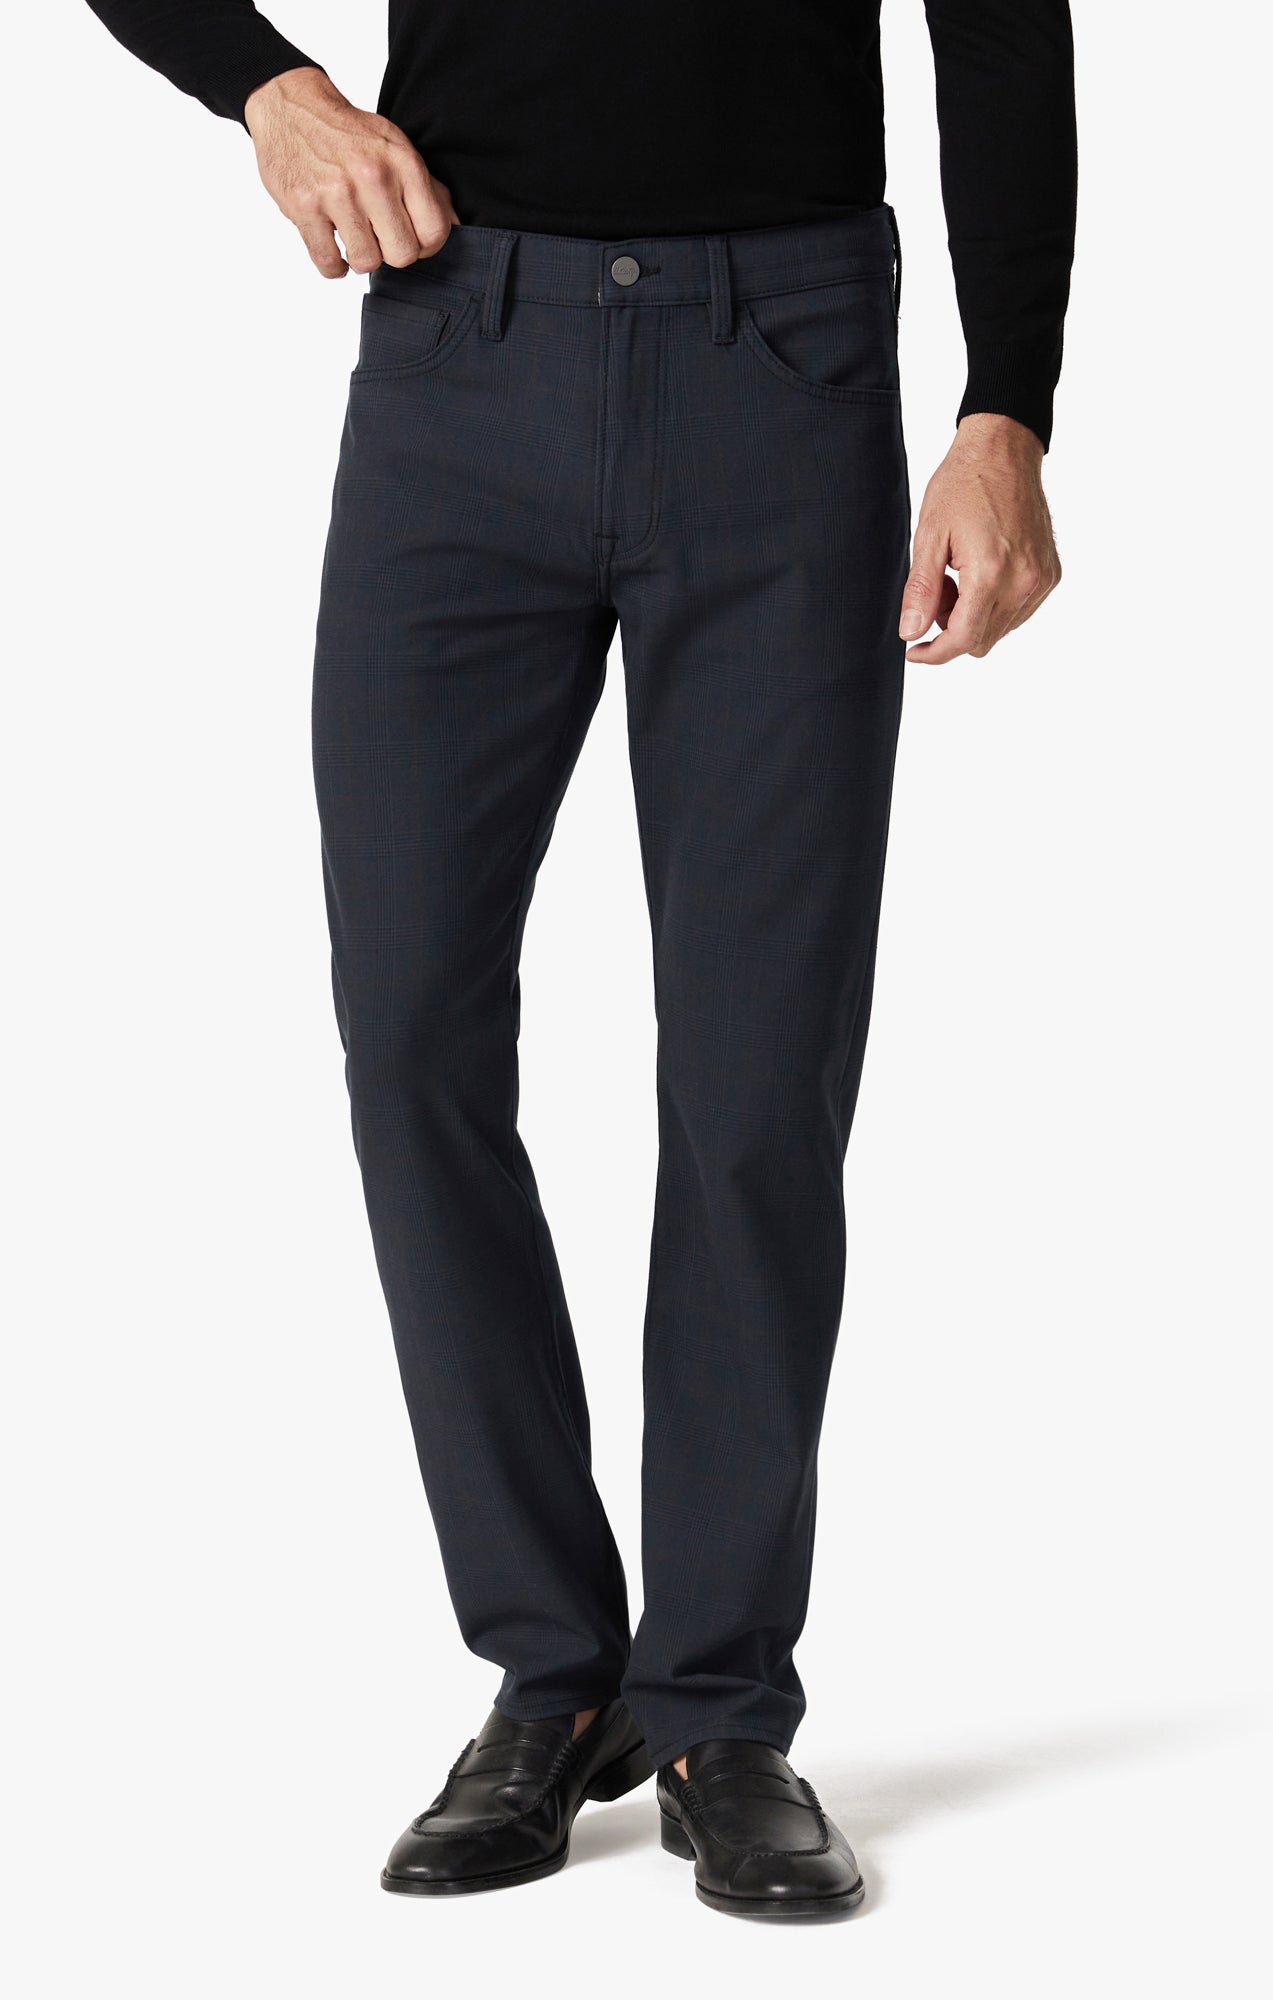 SIAL - Black Men's Casual Pant Smart Dress Pant Size: 30/32/34/36  Price:1400  pant